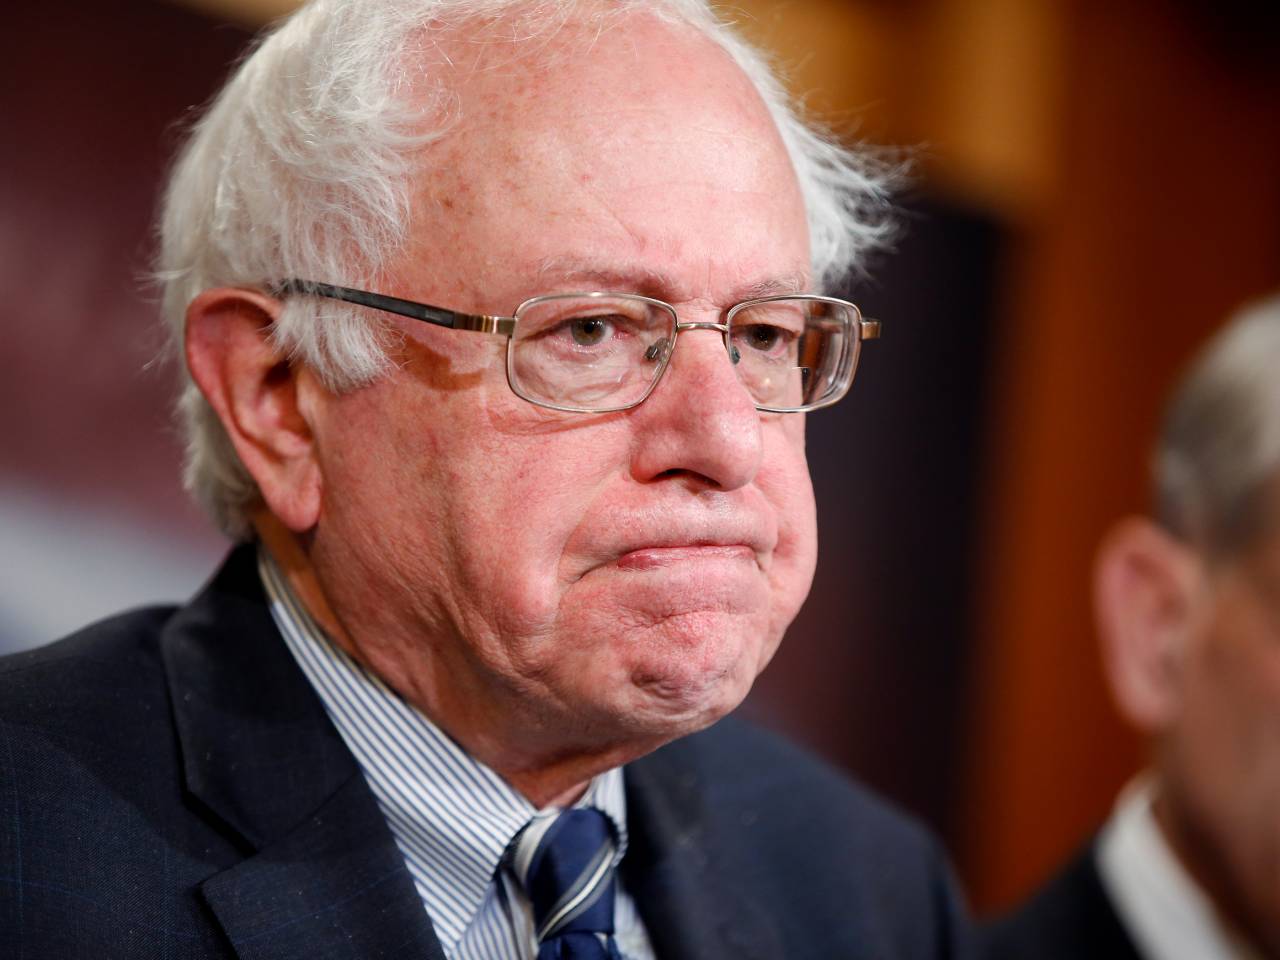 Bernie Sanders leaves the Democratic Party